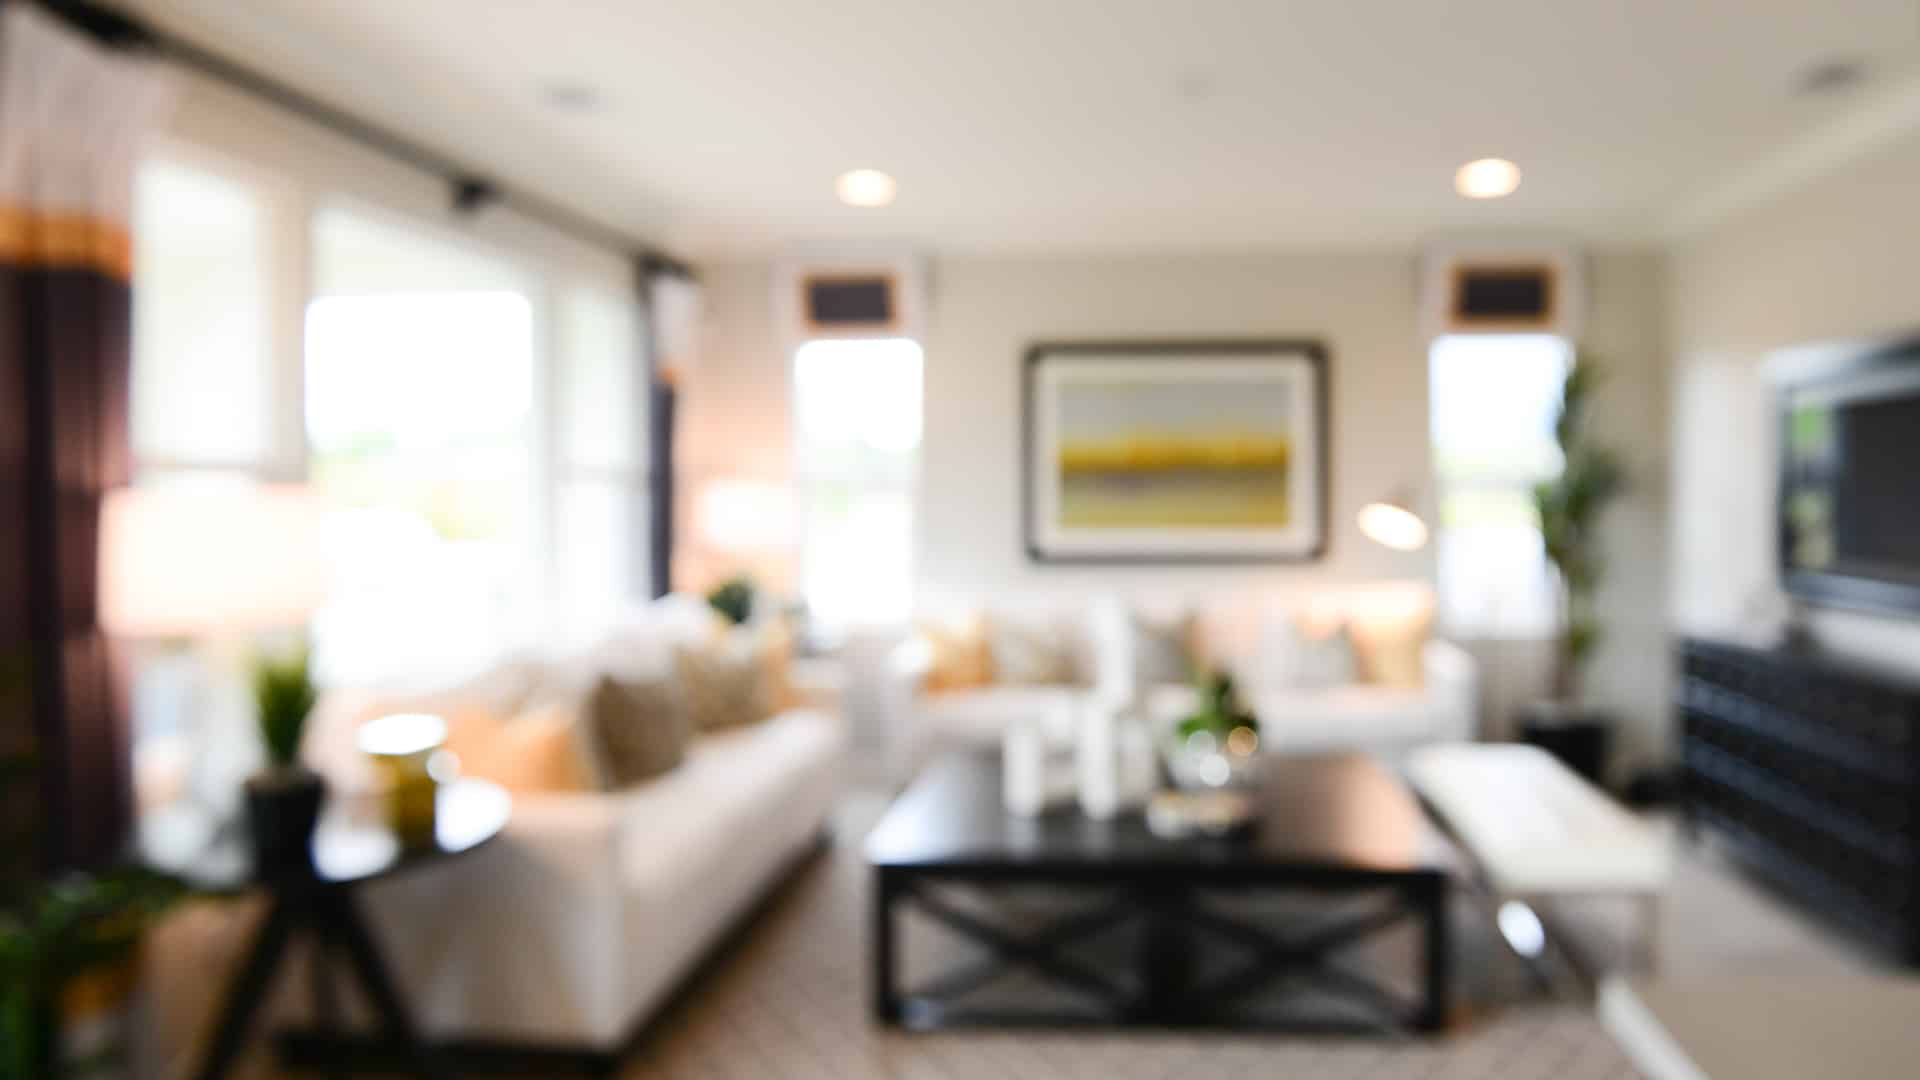 Blurry living room